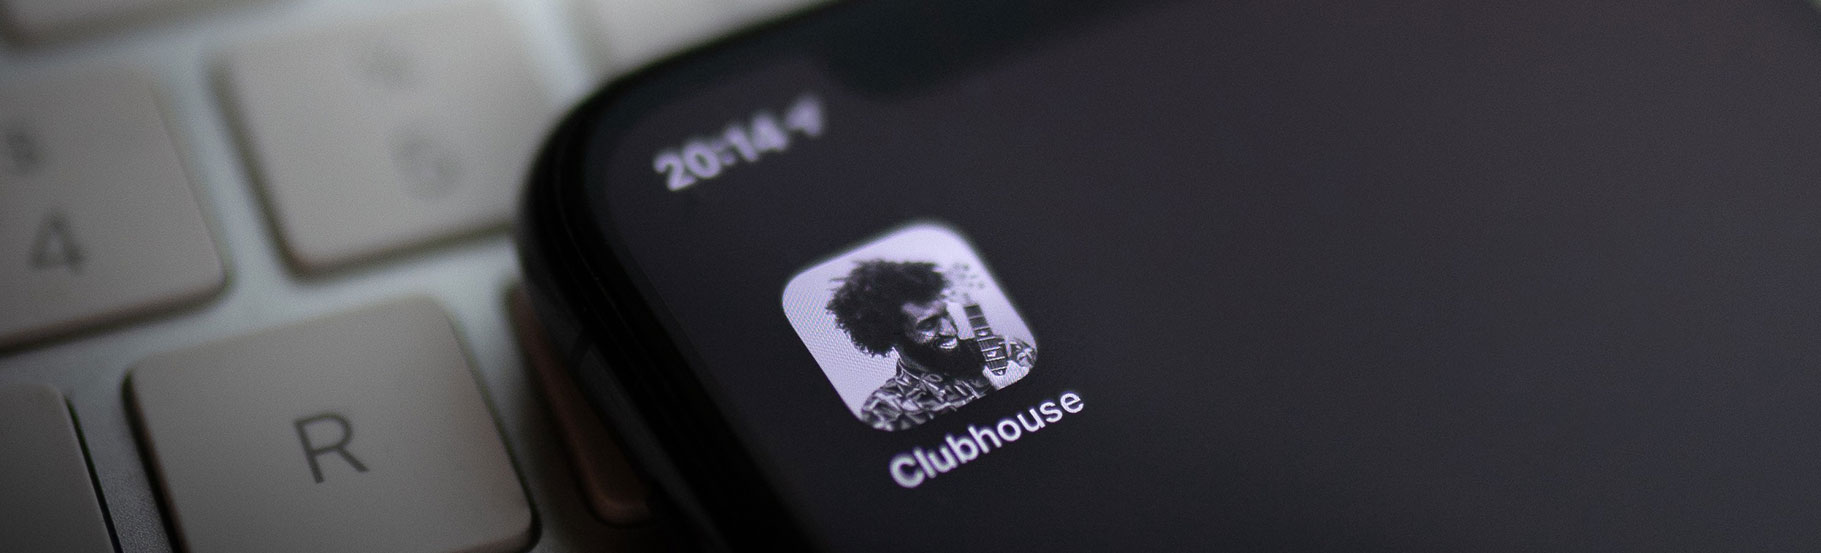 Slovo r na tastaturi i ikonica Clubhouse na ekranu mobilnog telefona